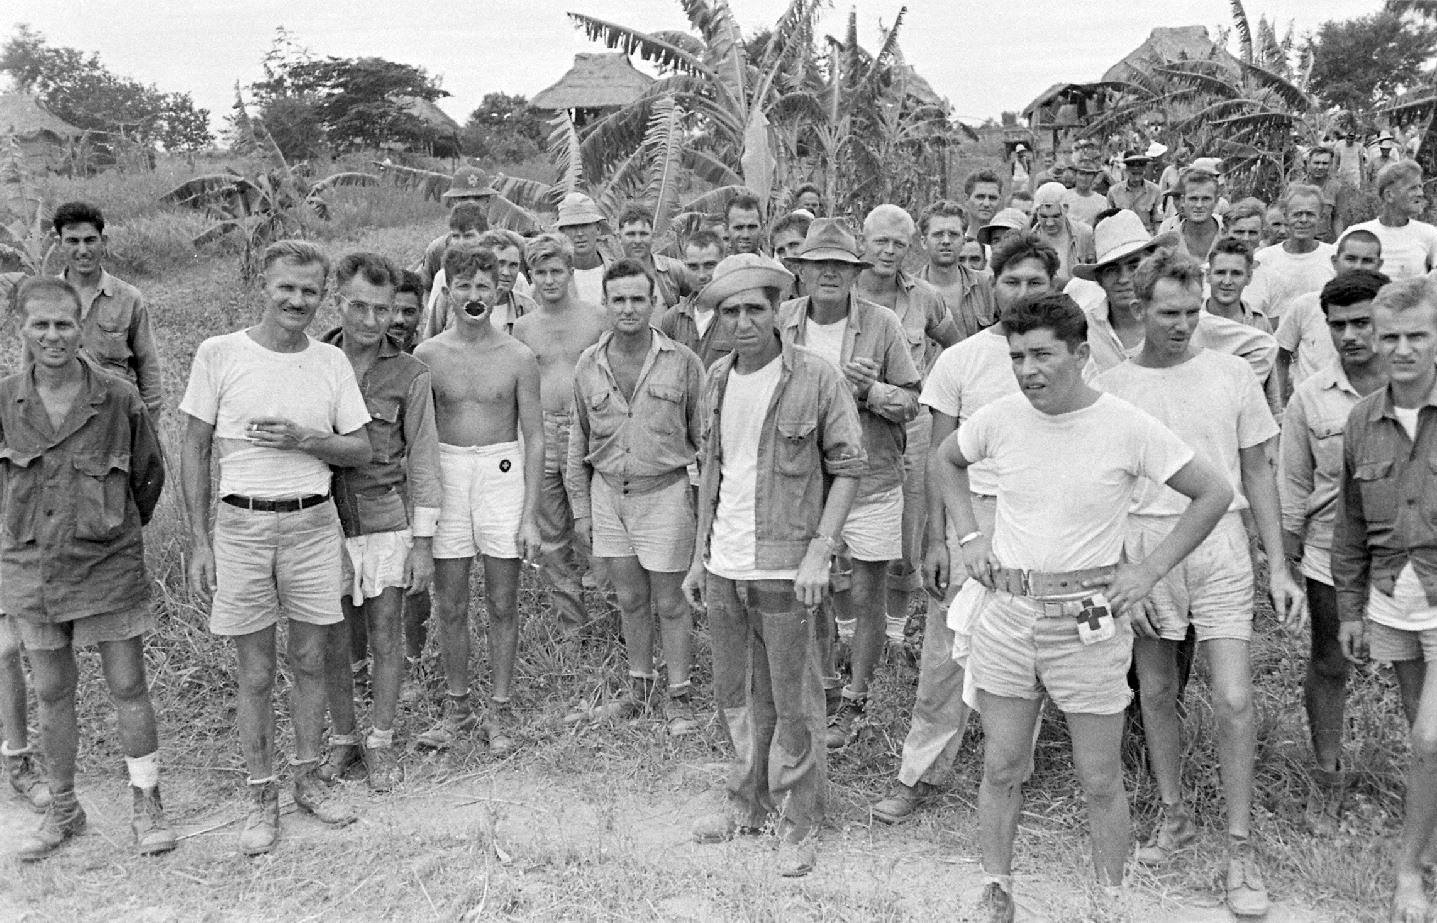 Photos - The Cabanatuan Raid. | A Military Photos & Video Website